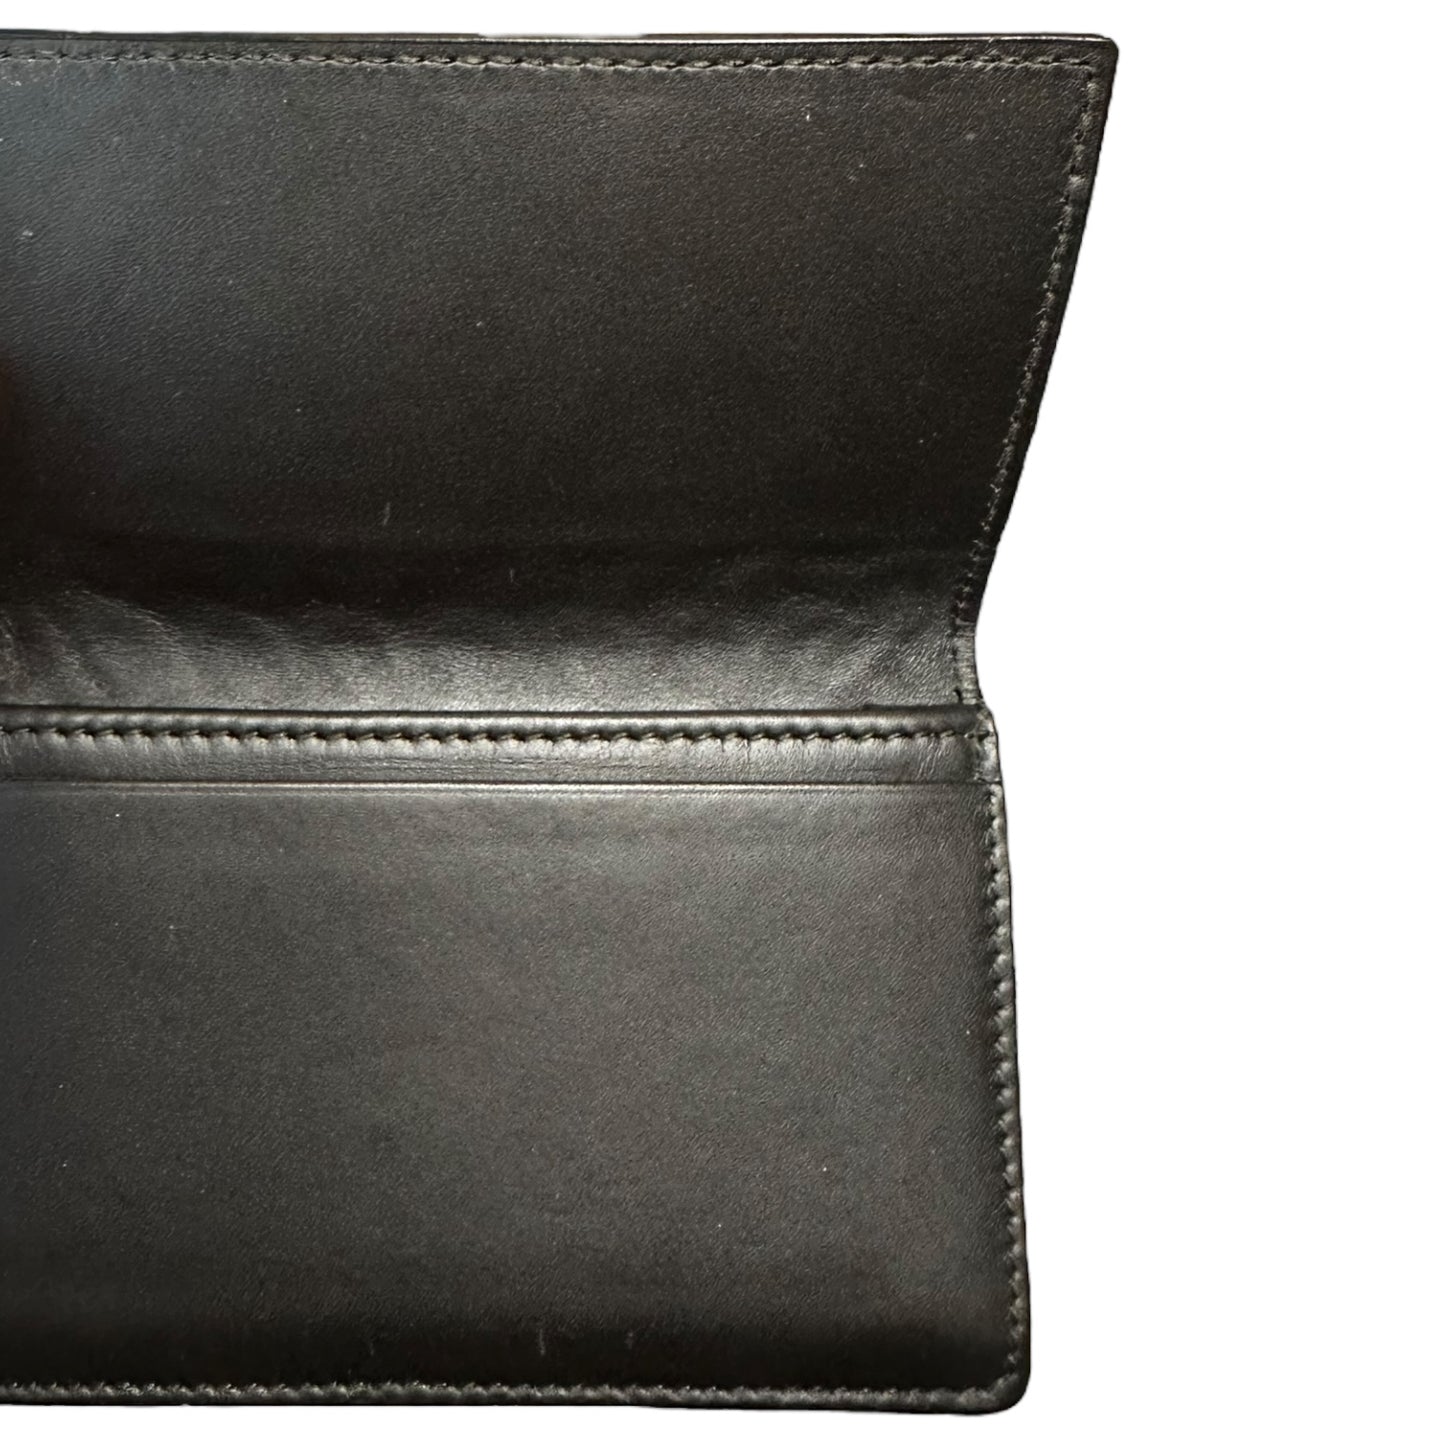 Bottega Veneta Black Nappa Intrecciato Compact Flap Wallet